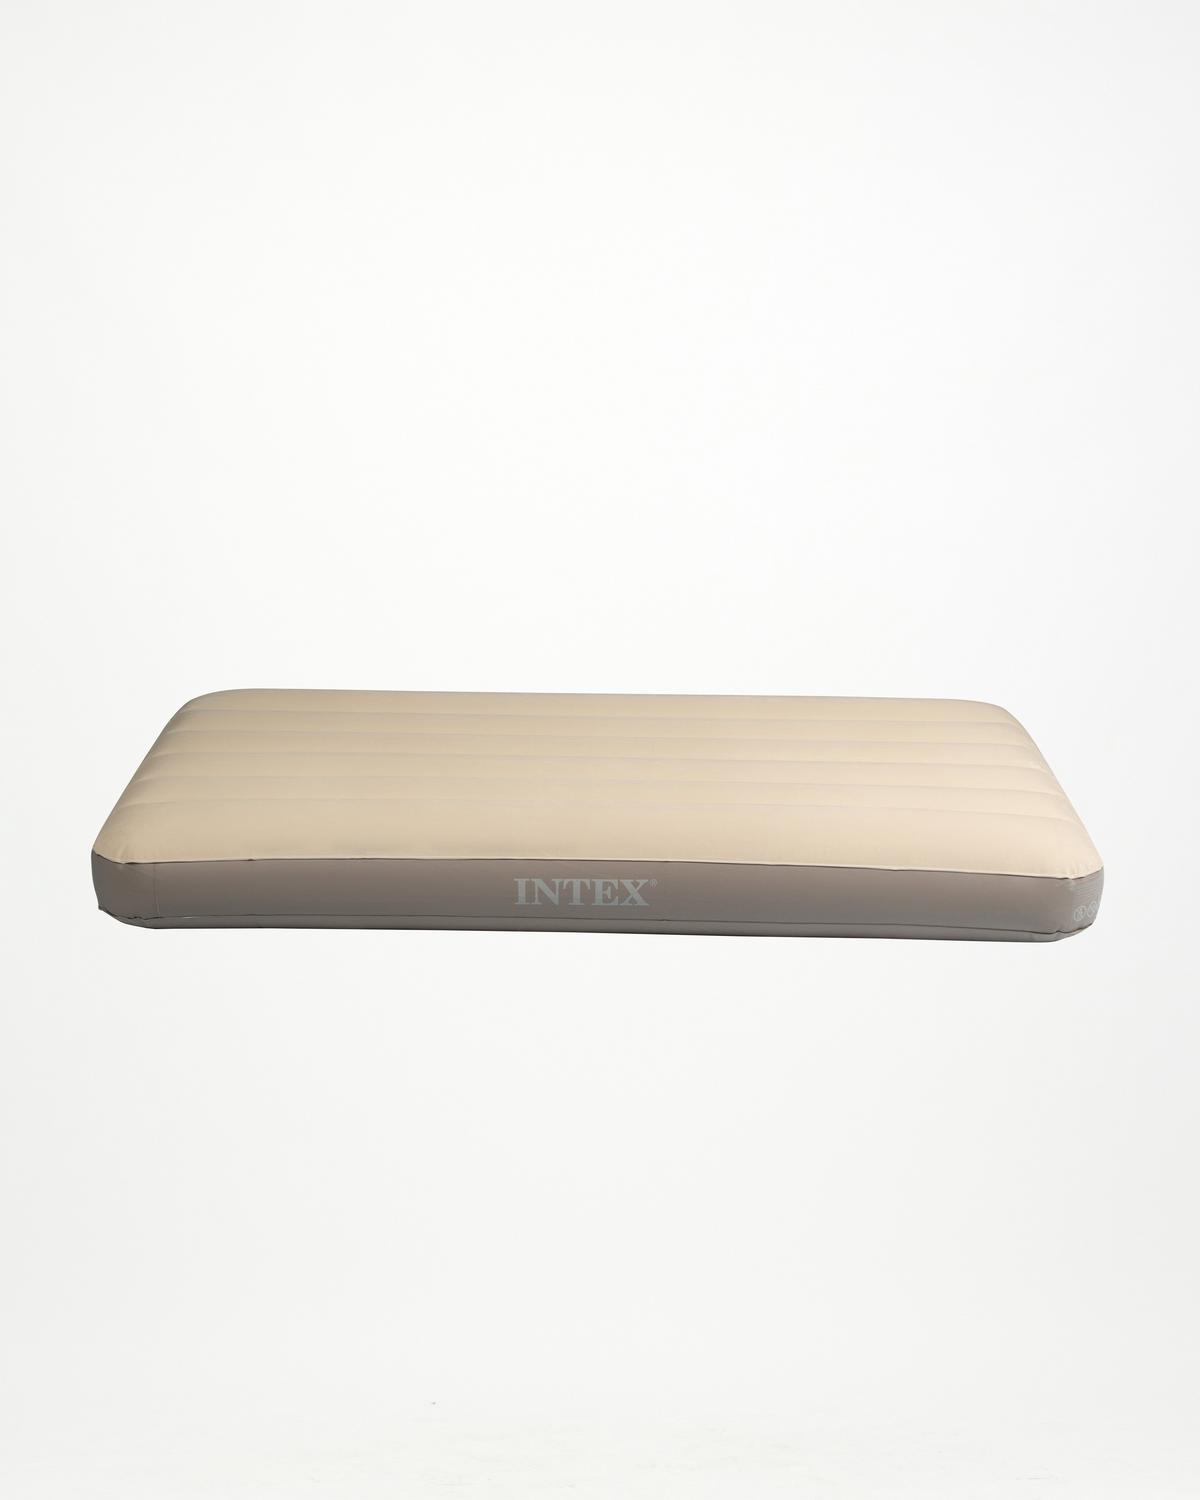 Intex Standard Dura-Beam Single Air Mattress -  Grey